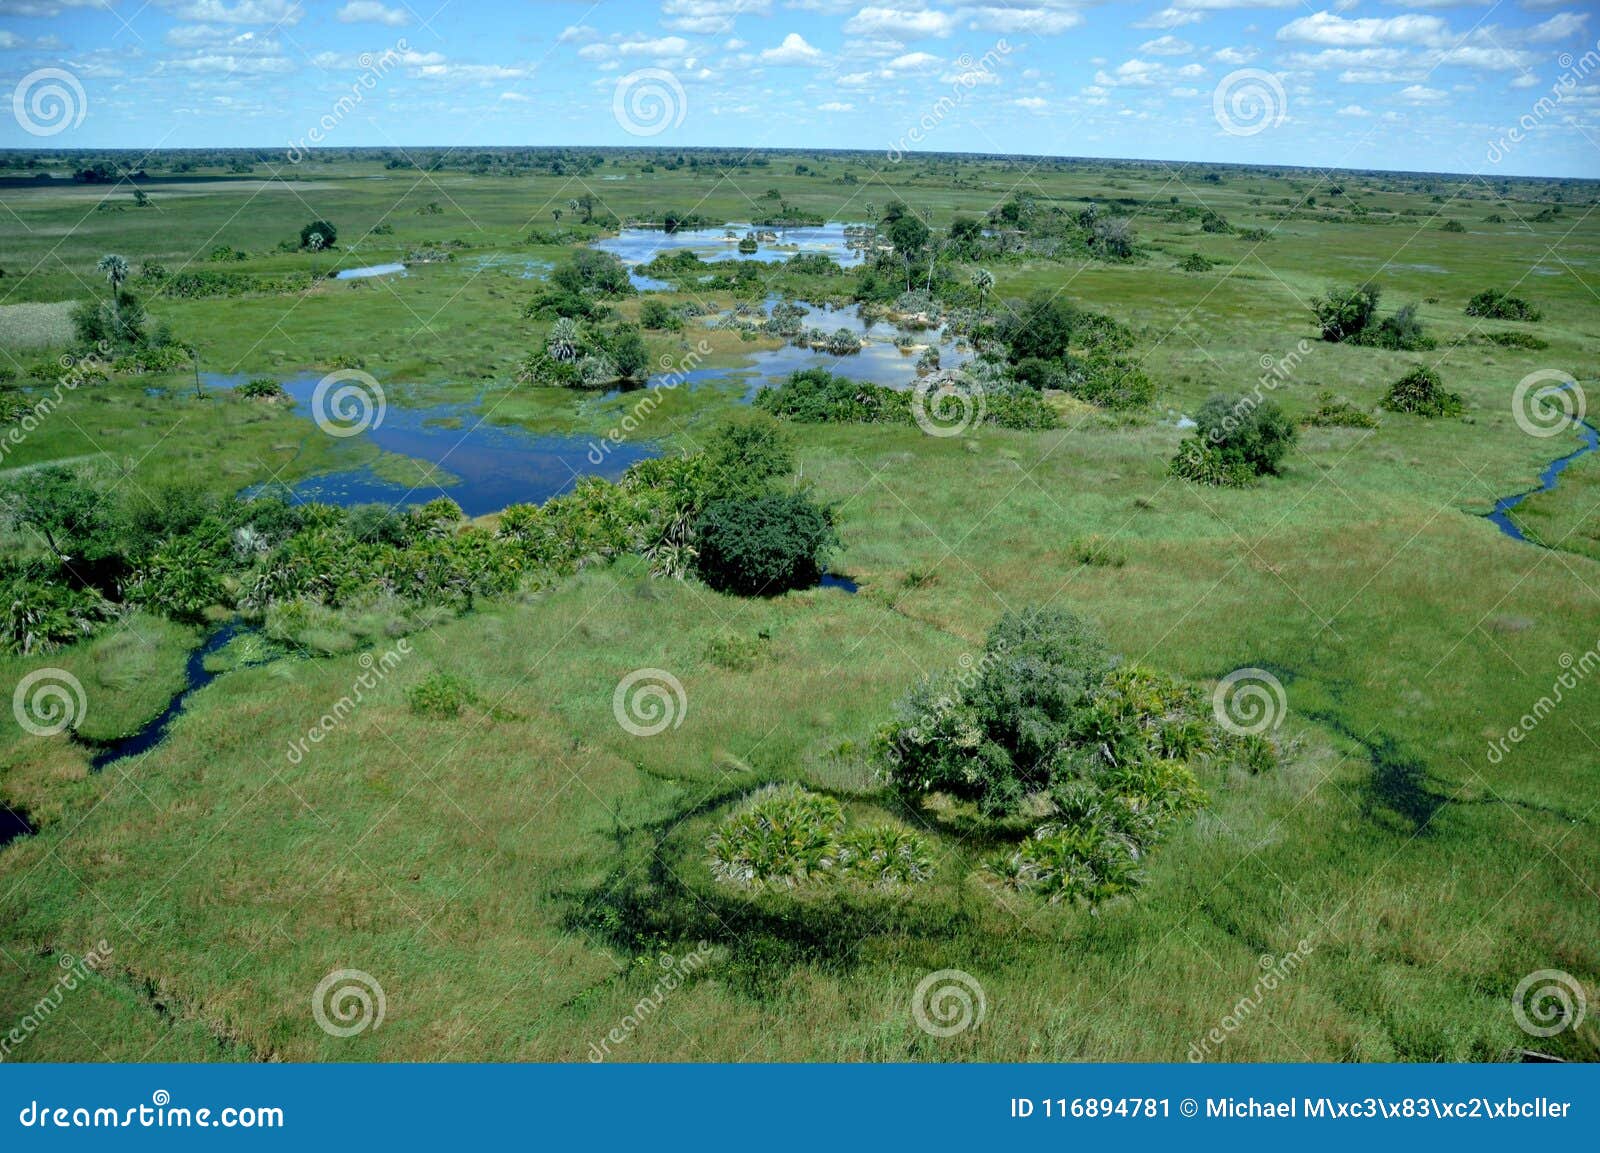 Garden Eden In The Kalahari Desert The Okavango Delta Stock Image